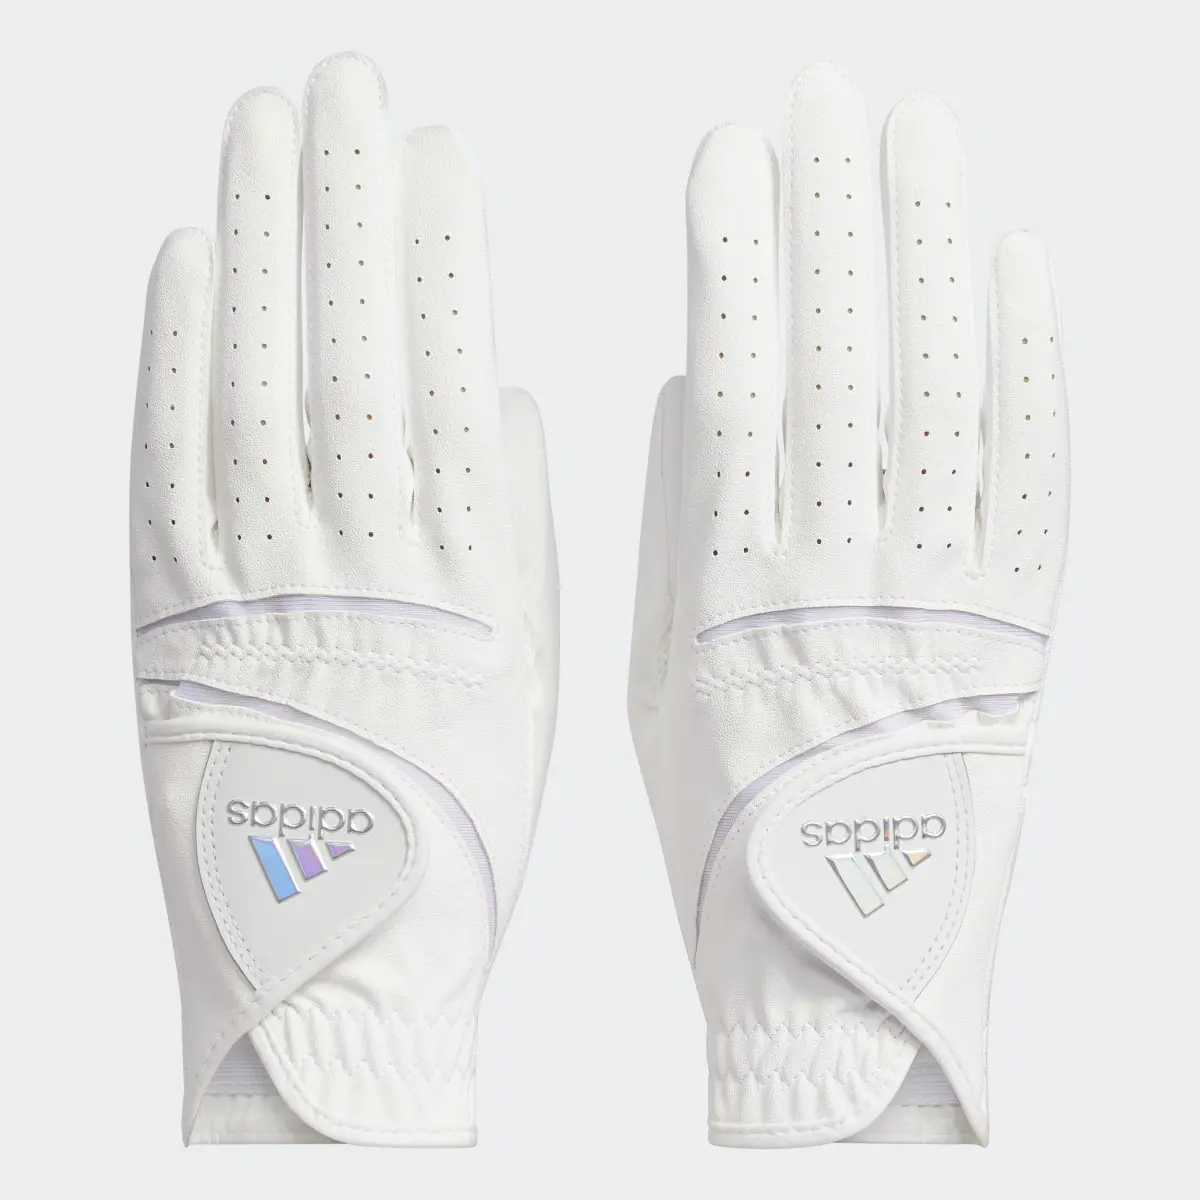 Adidas Light and Comfort Gloves. 2